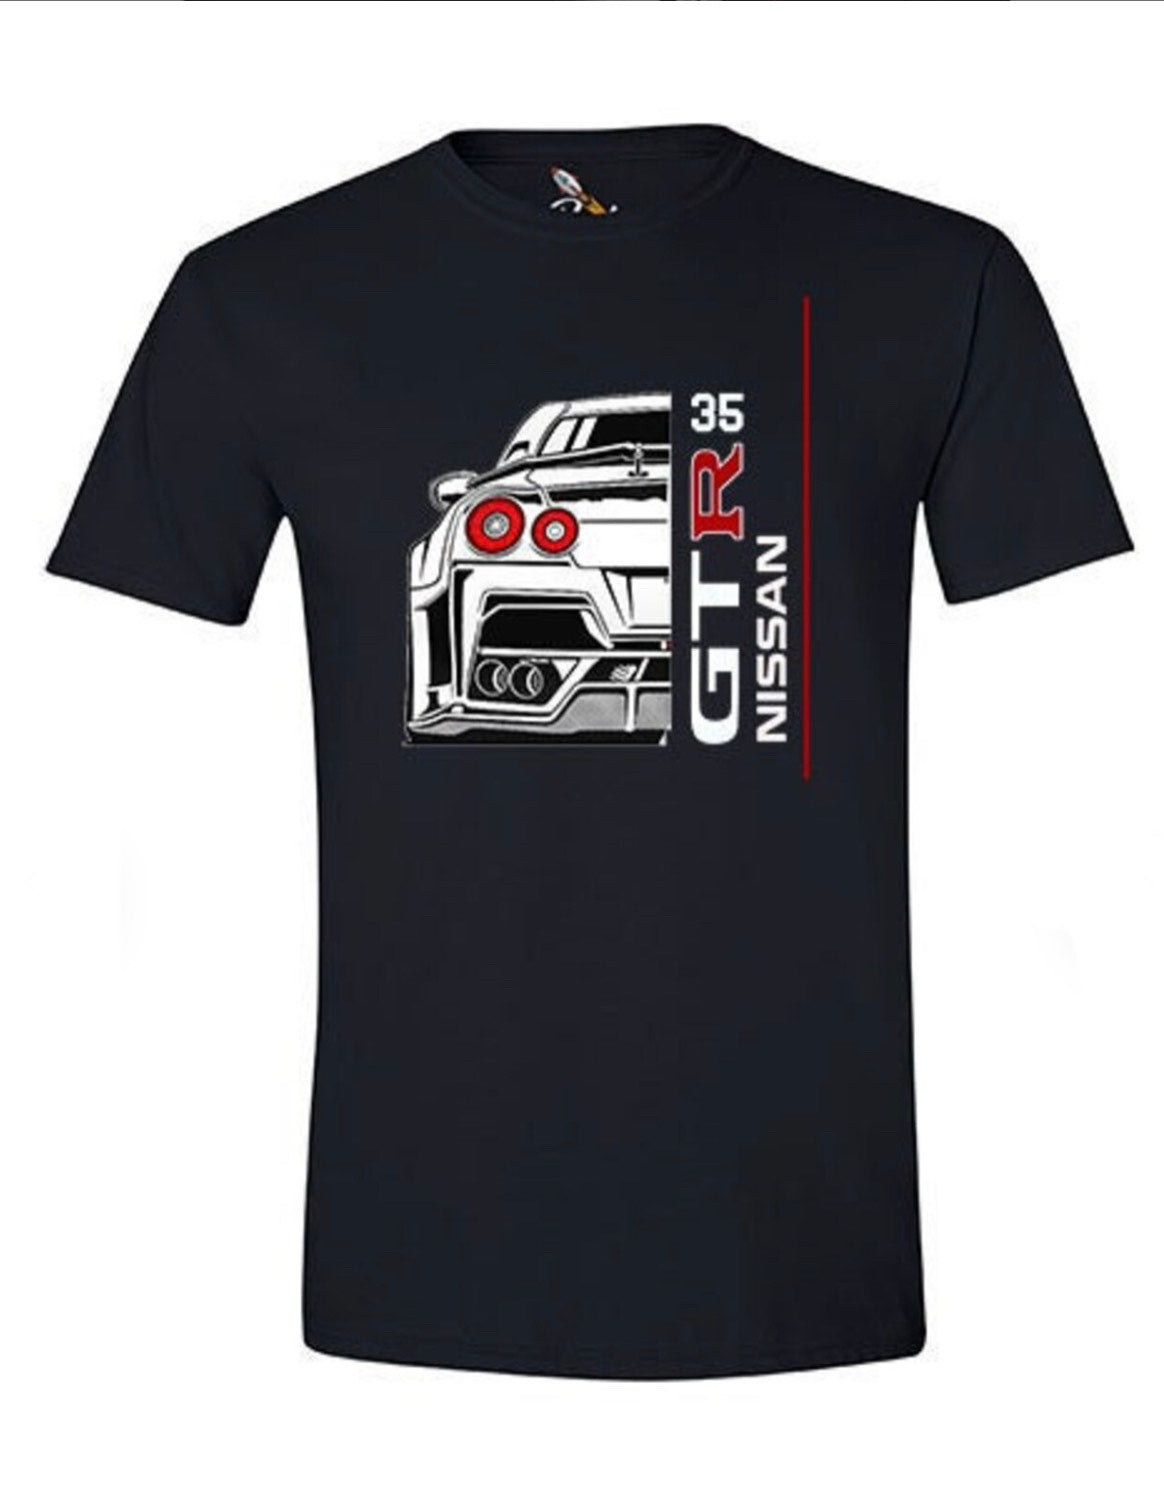 Nissan GTR 35 Racing Car Tee